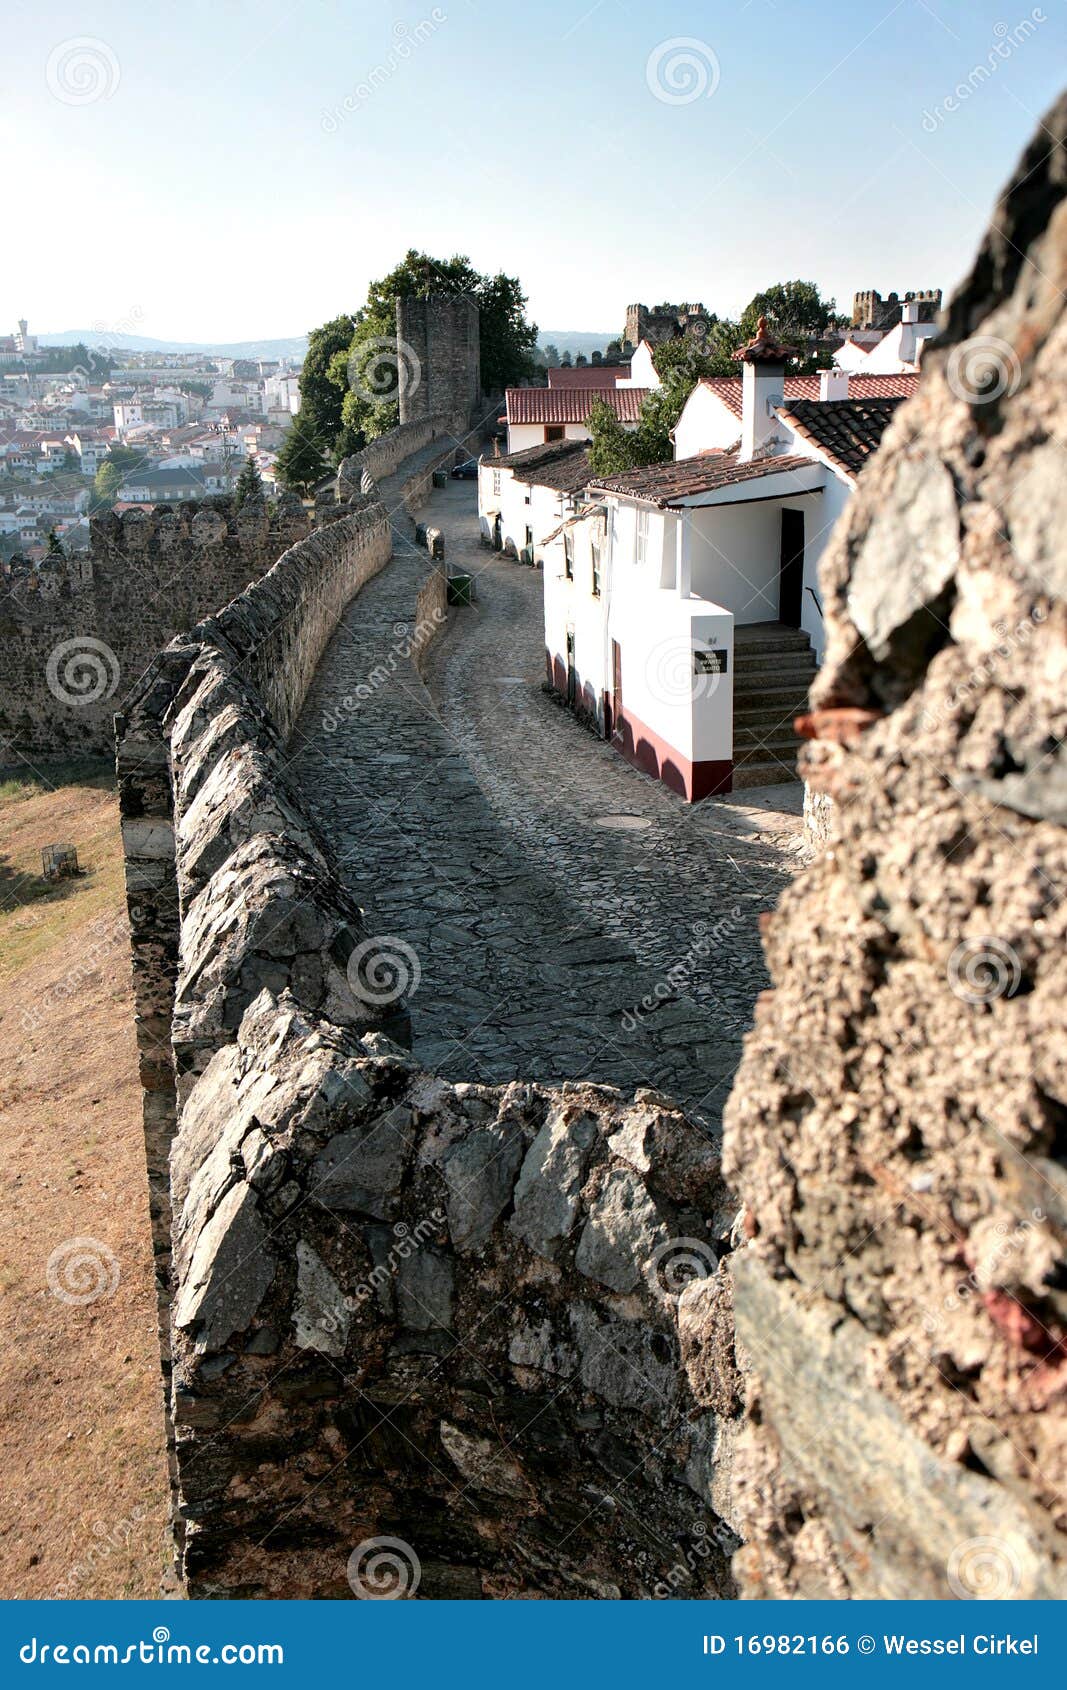 ancient historical fortress braganca, portugal